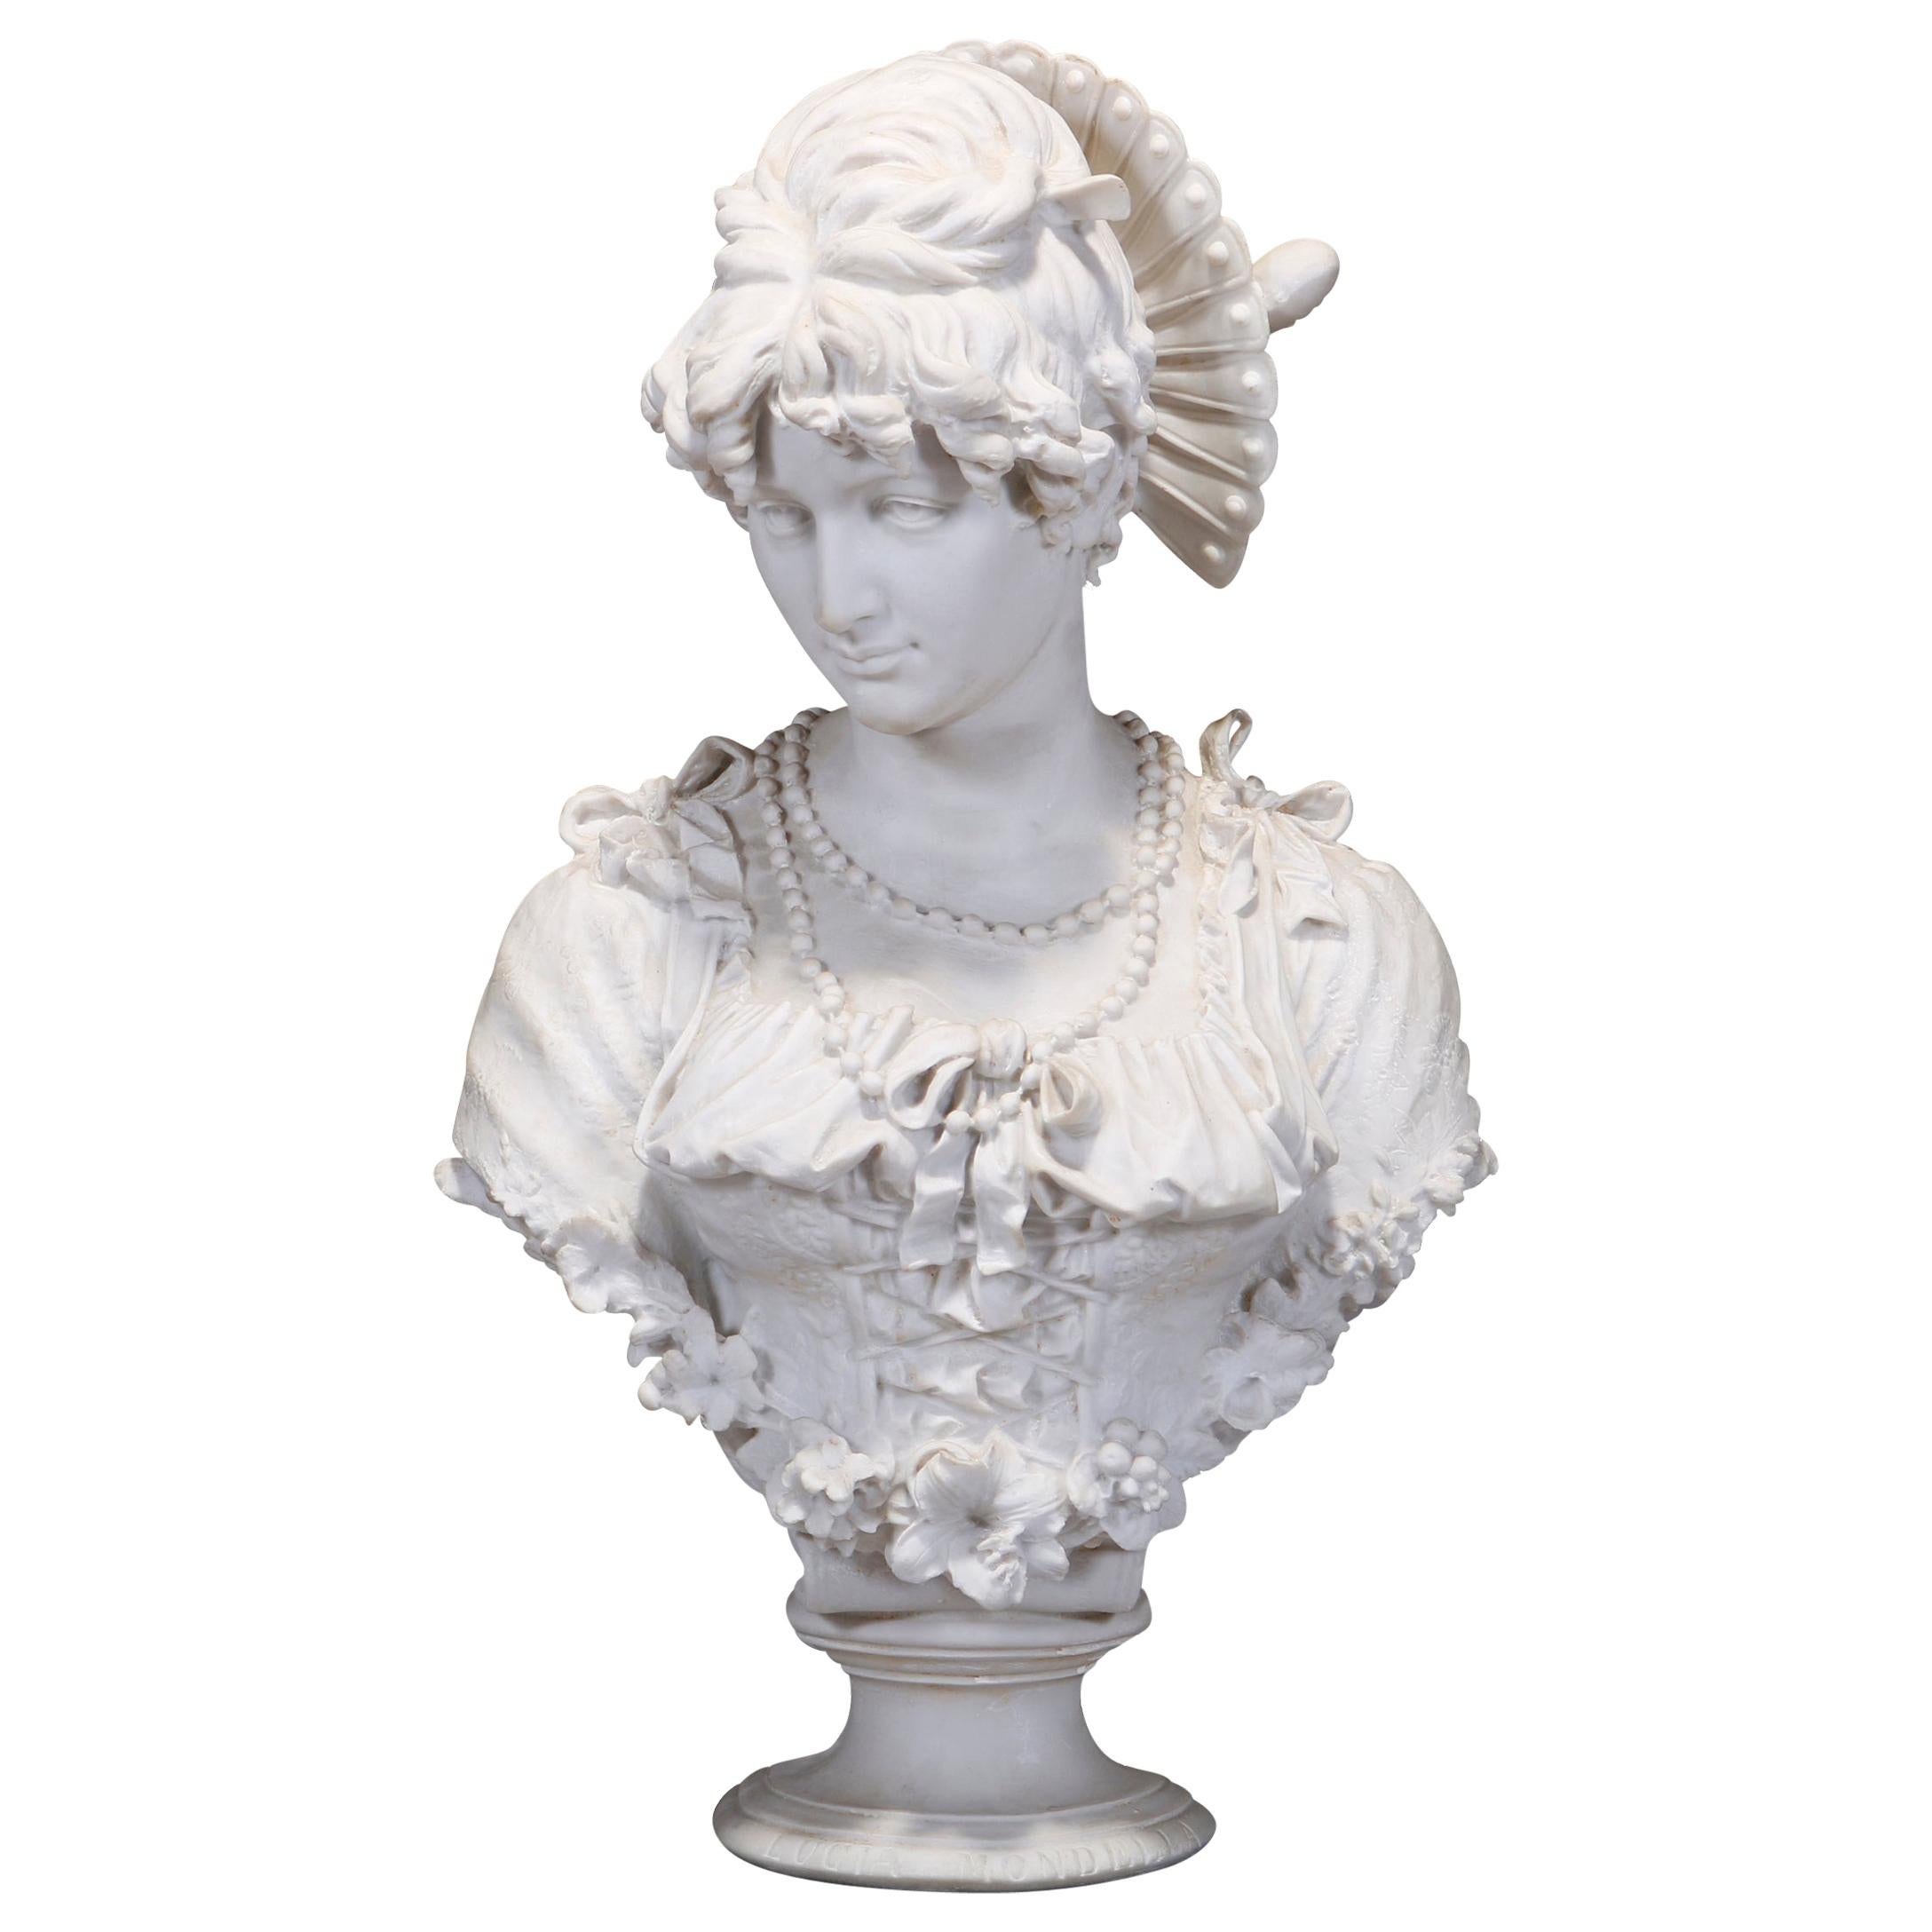 Antique Monumental Parian Enrico Lapini Bust Sculpture of Lucia Mondella, c 1893